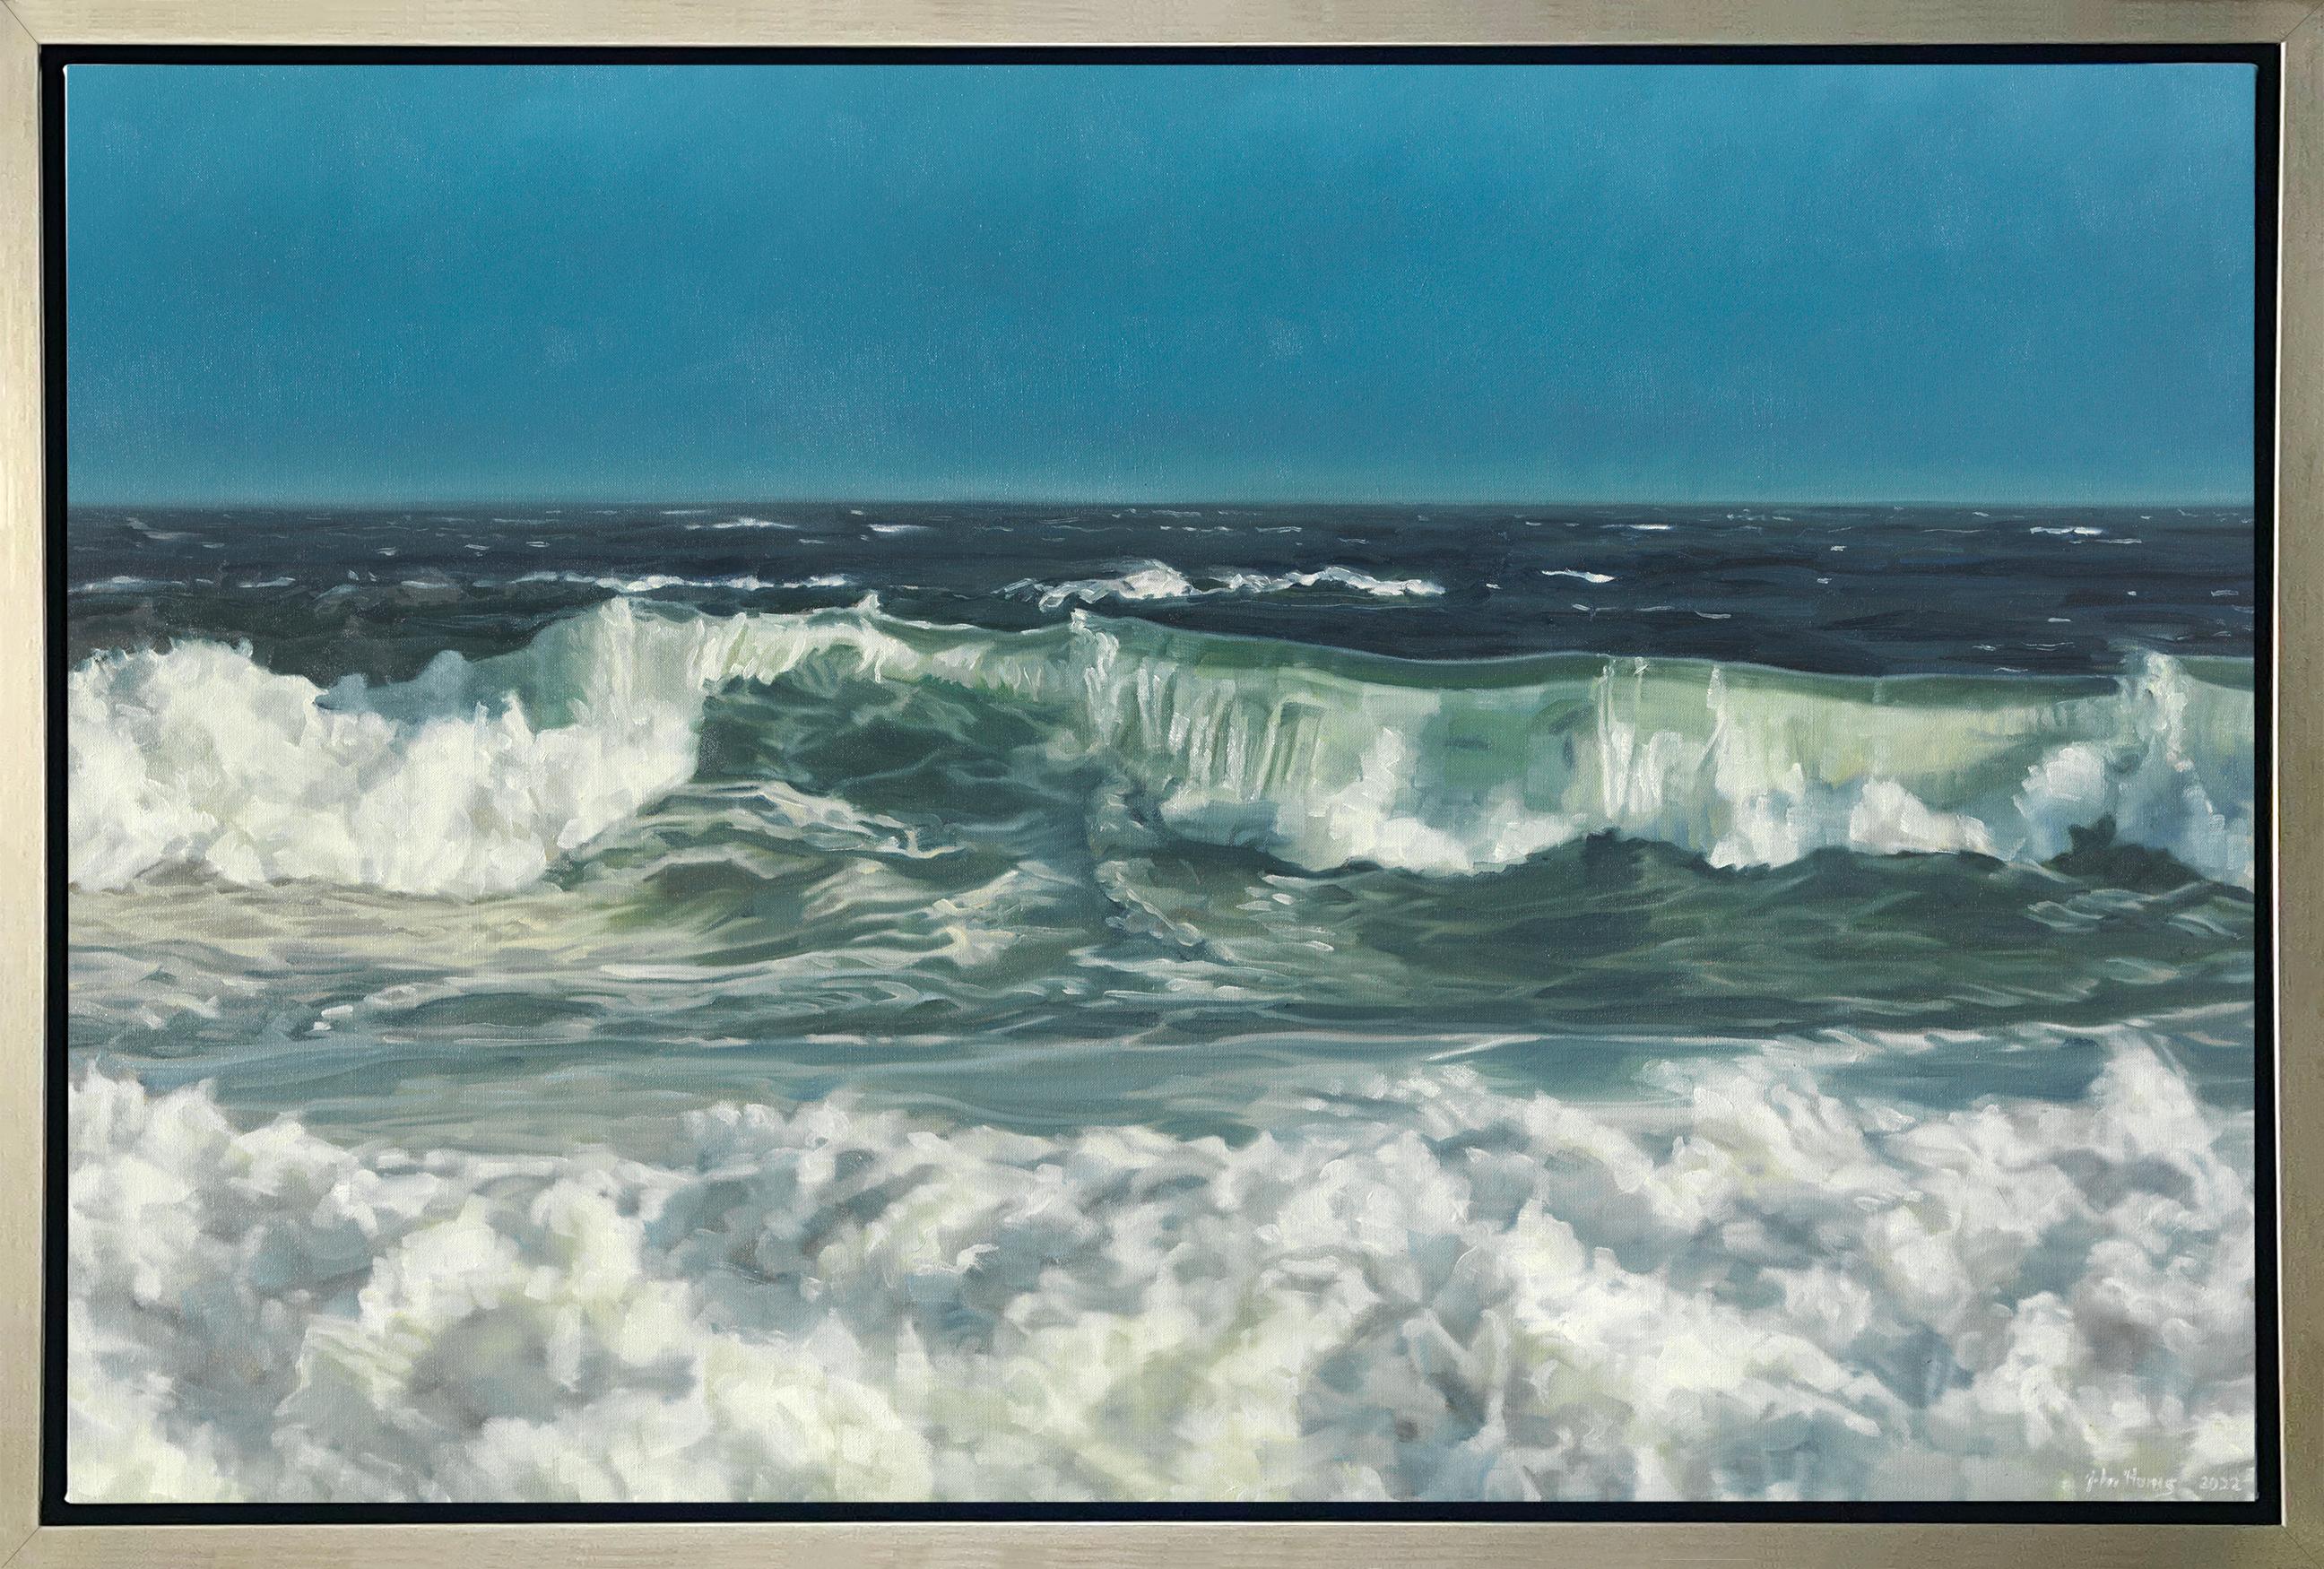 John Harris (painter) Landscape Print - "Curler, " Framed Limited Edition Giclee Print, 24" x 36"